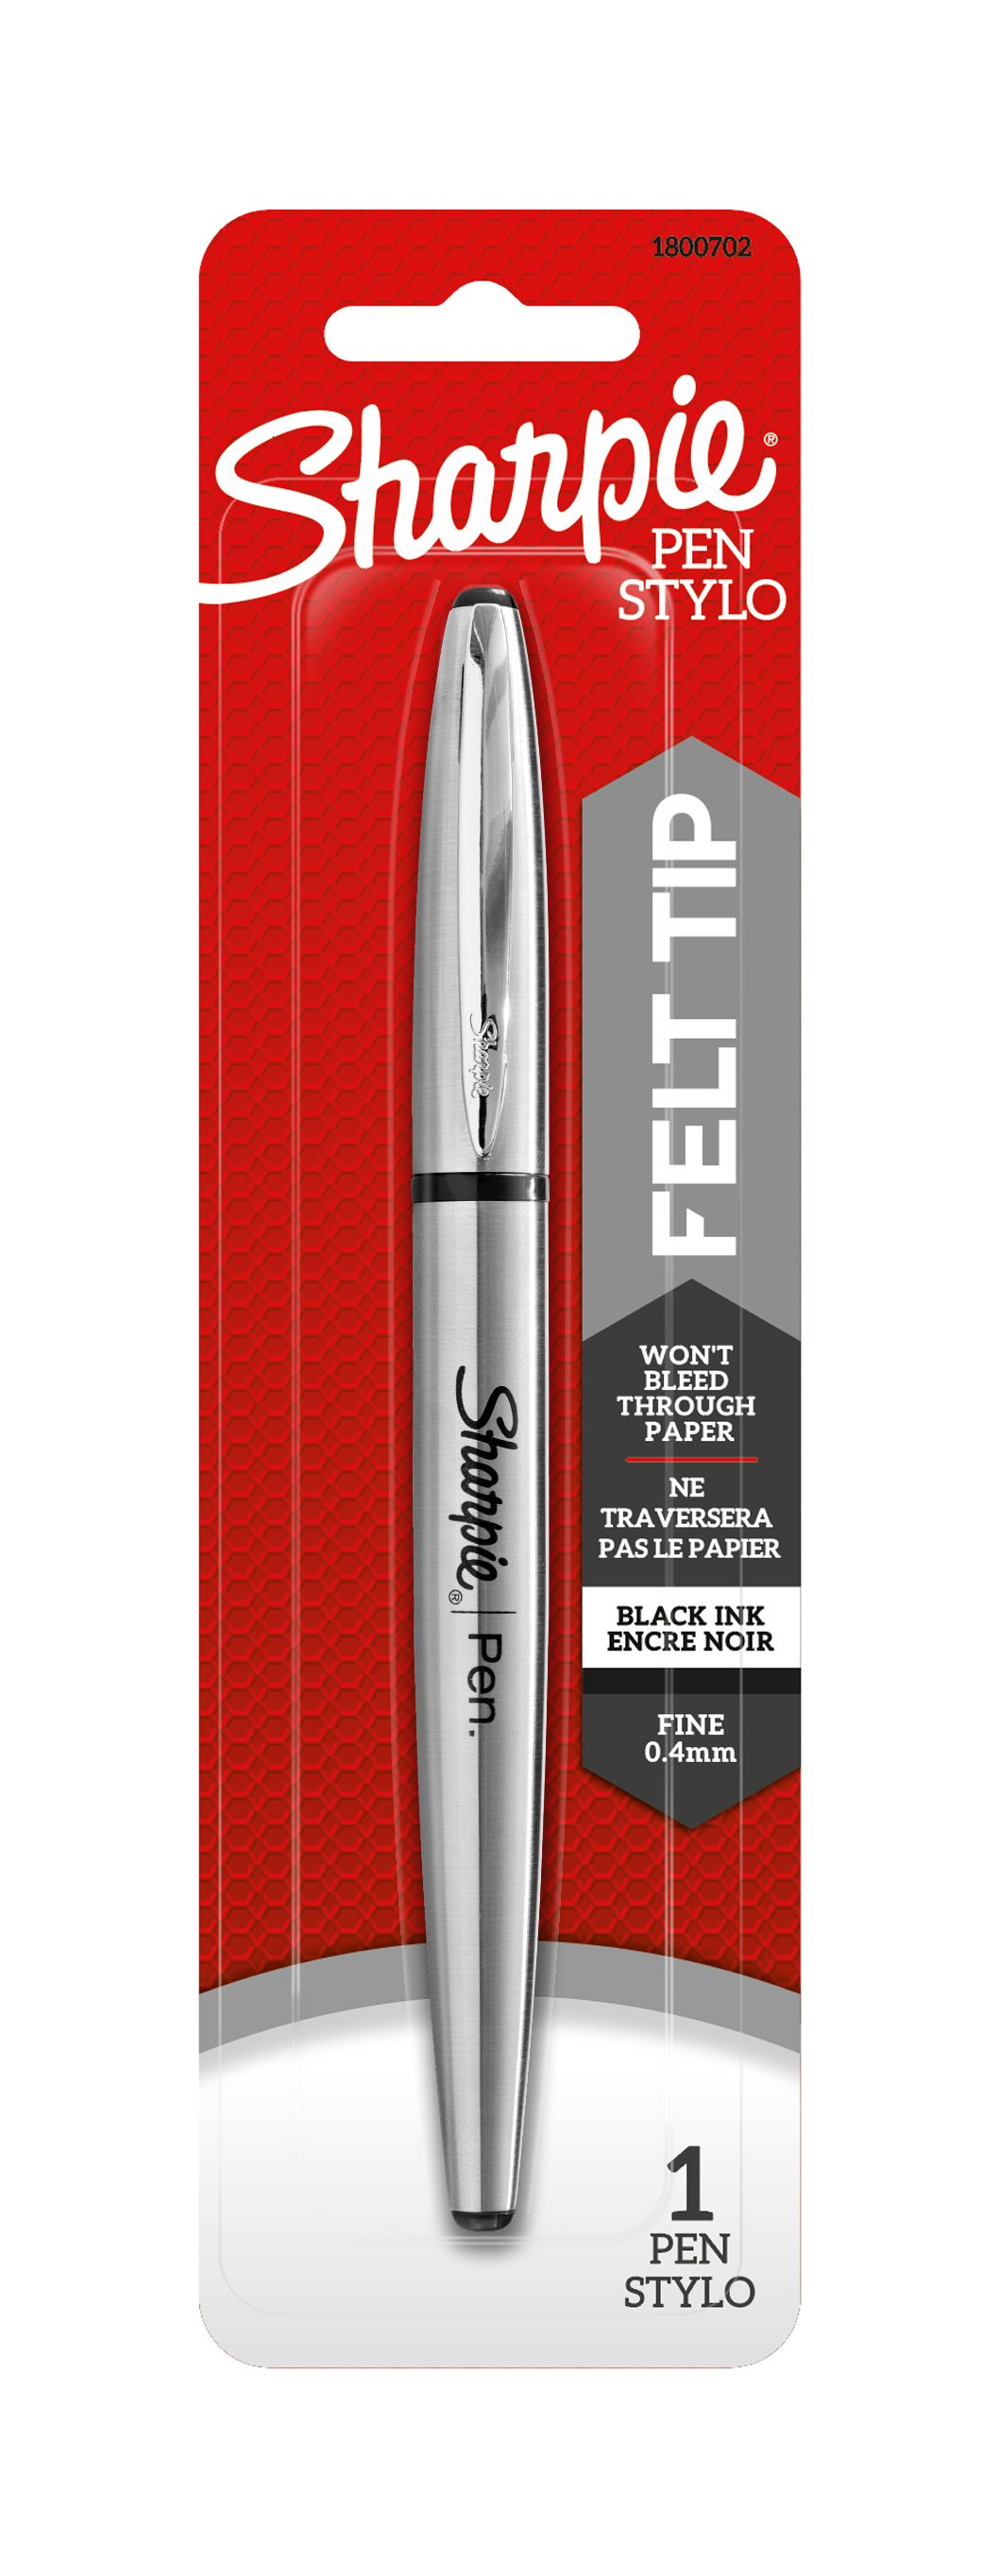 Sharpie Felt Tip Pens, Fine Point (0.4mm), Assorted Colors, 4